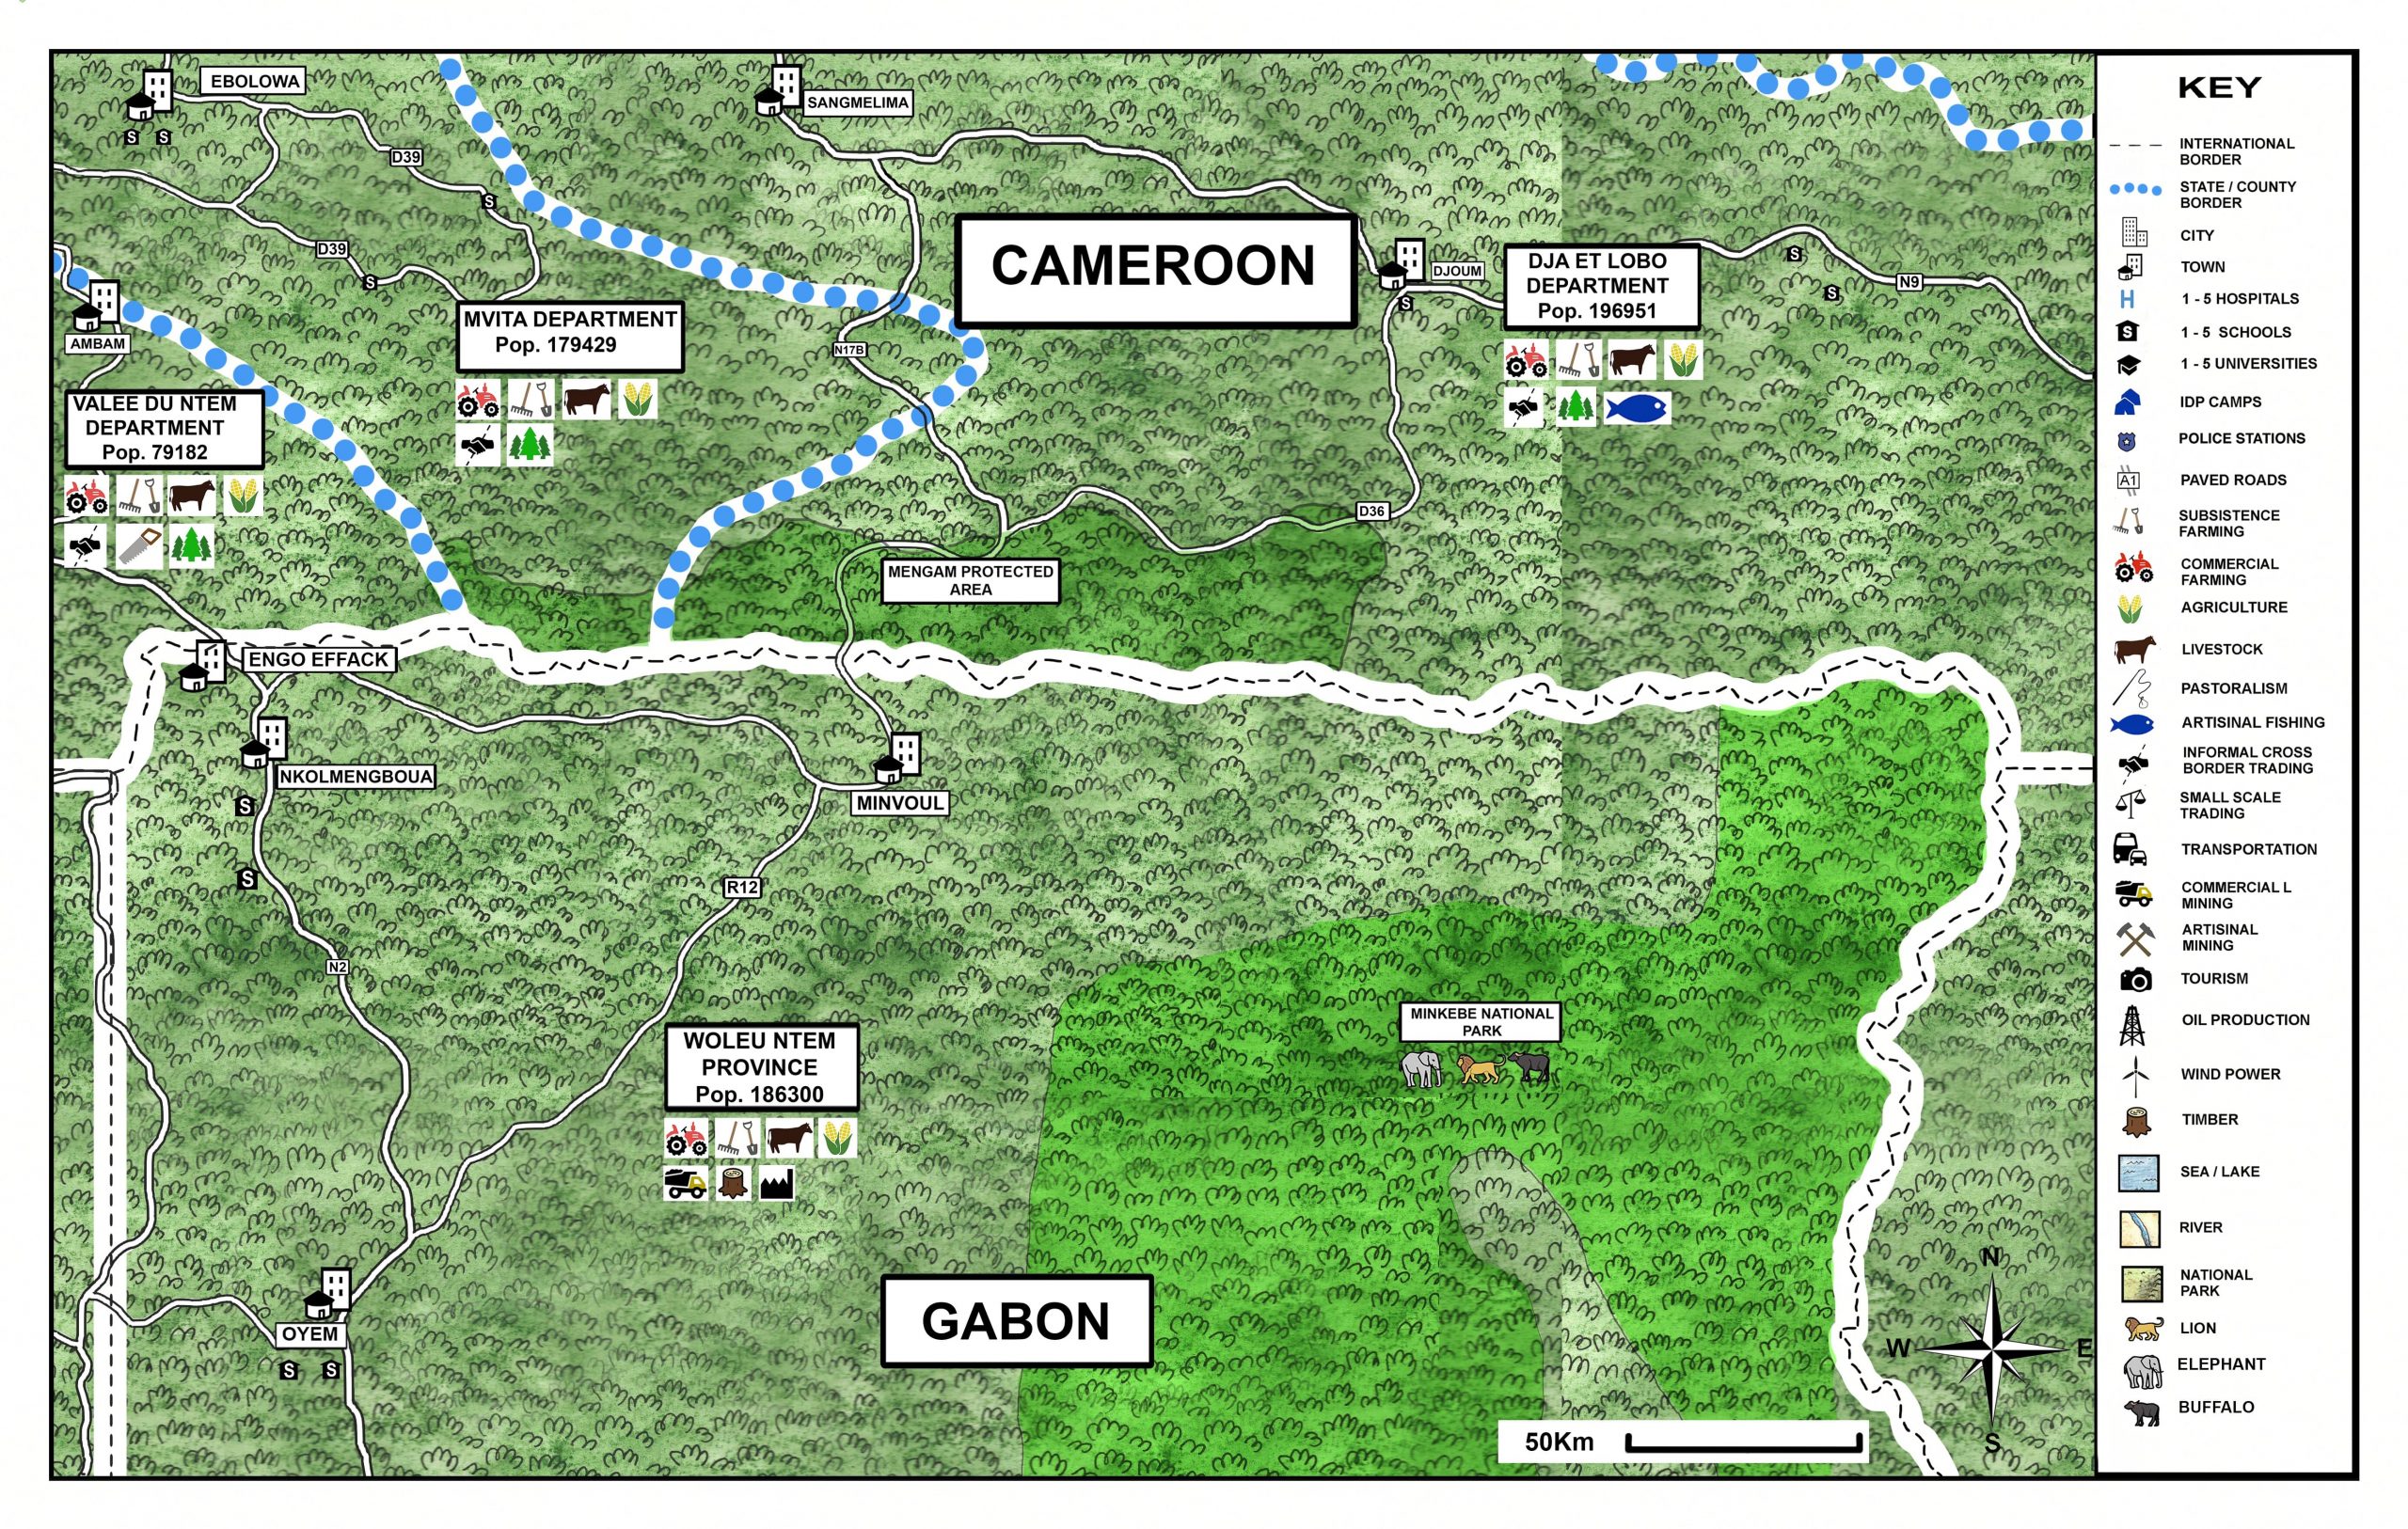 CAMEROON - GABON_illustration